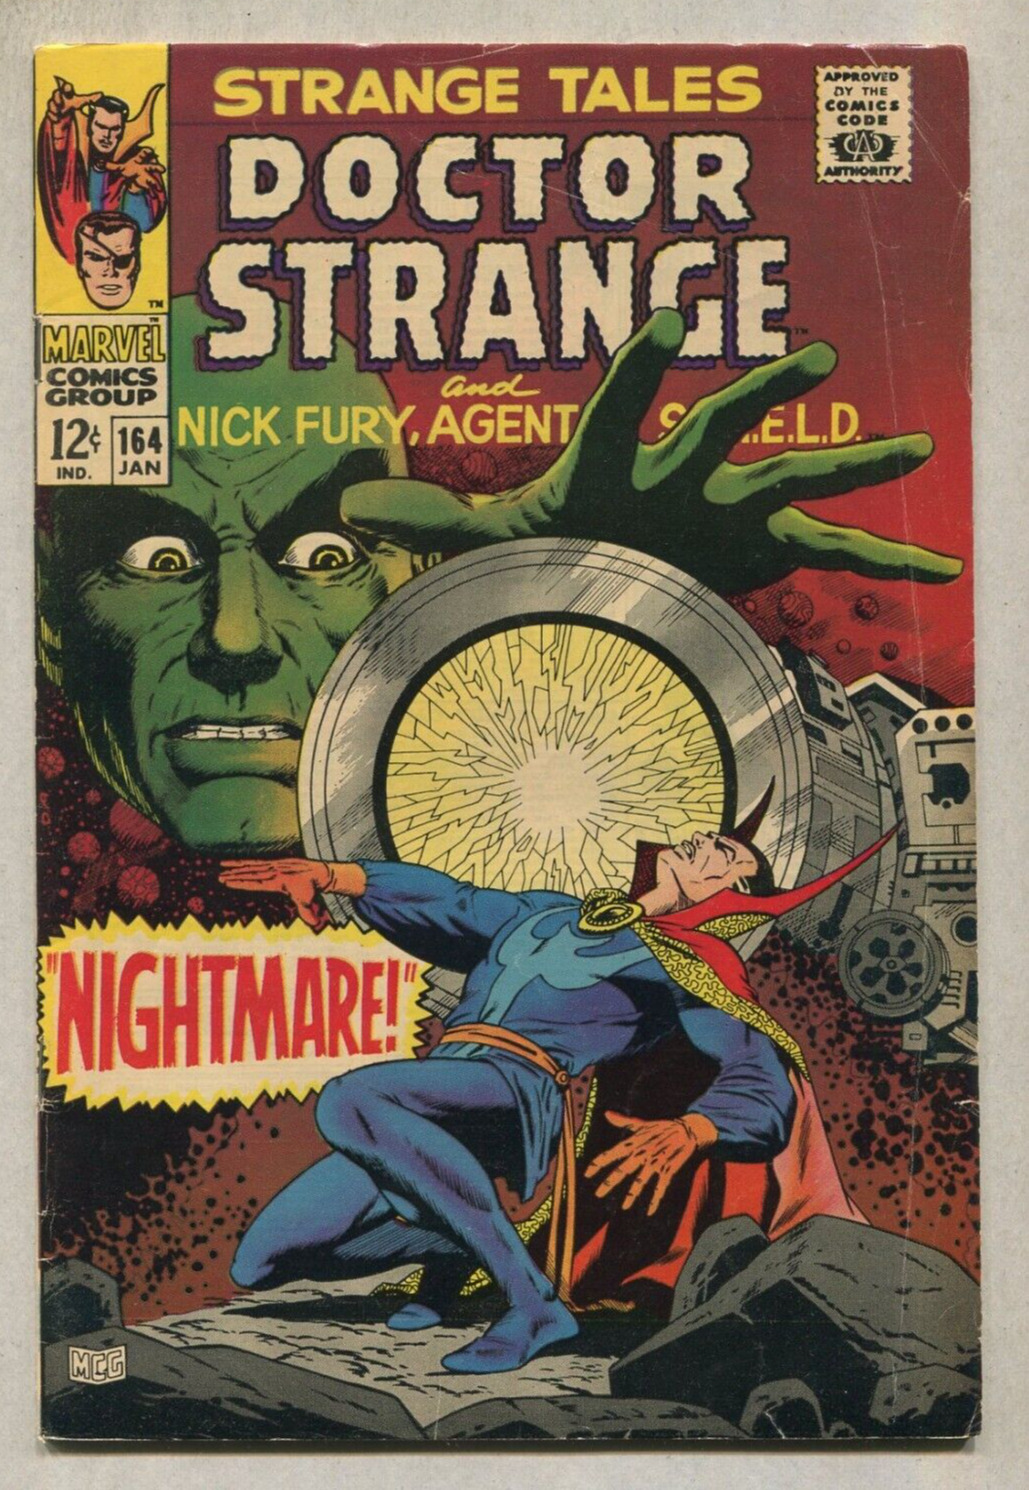 Strange Tales #164 VG/FN   Nick Fury, Doctor Strange   Marvel SA